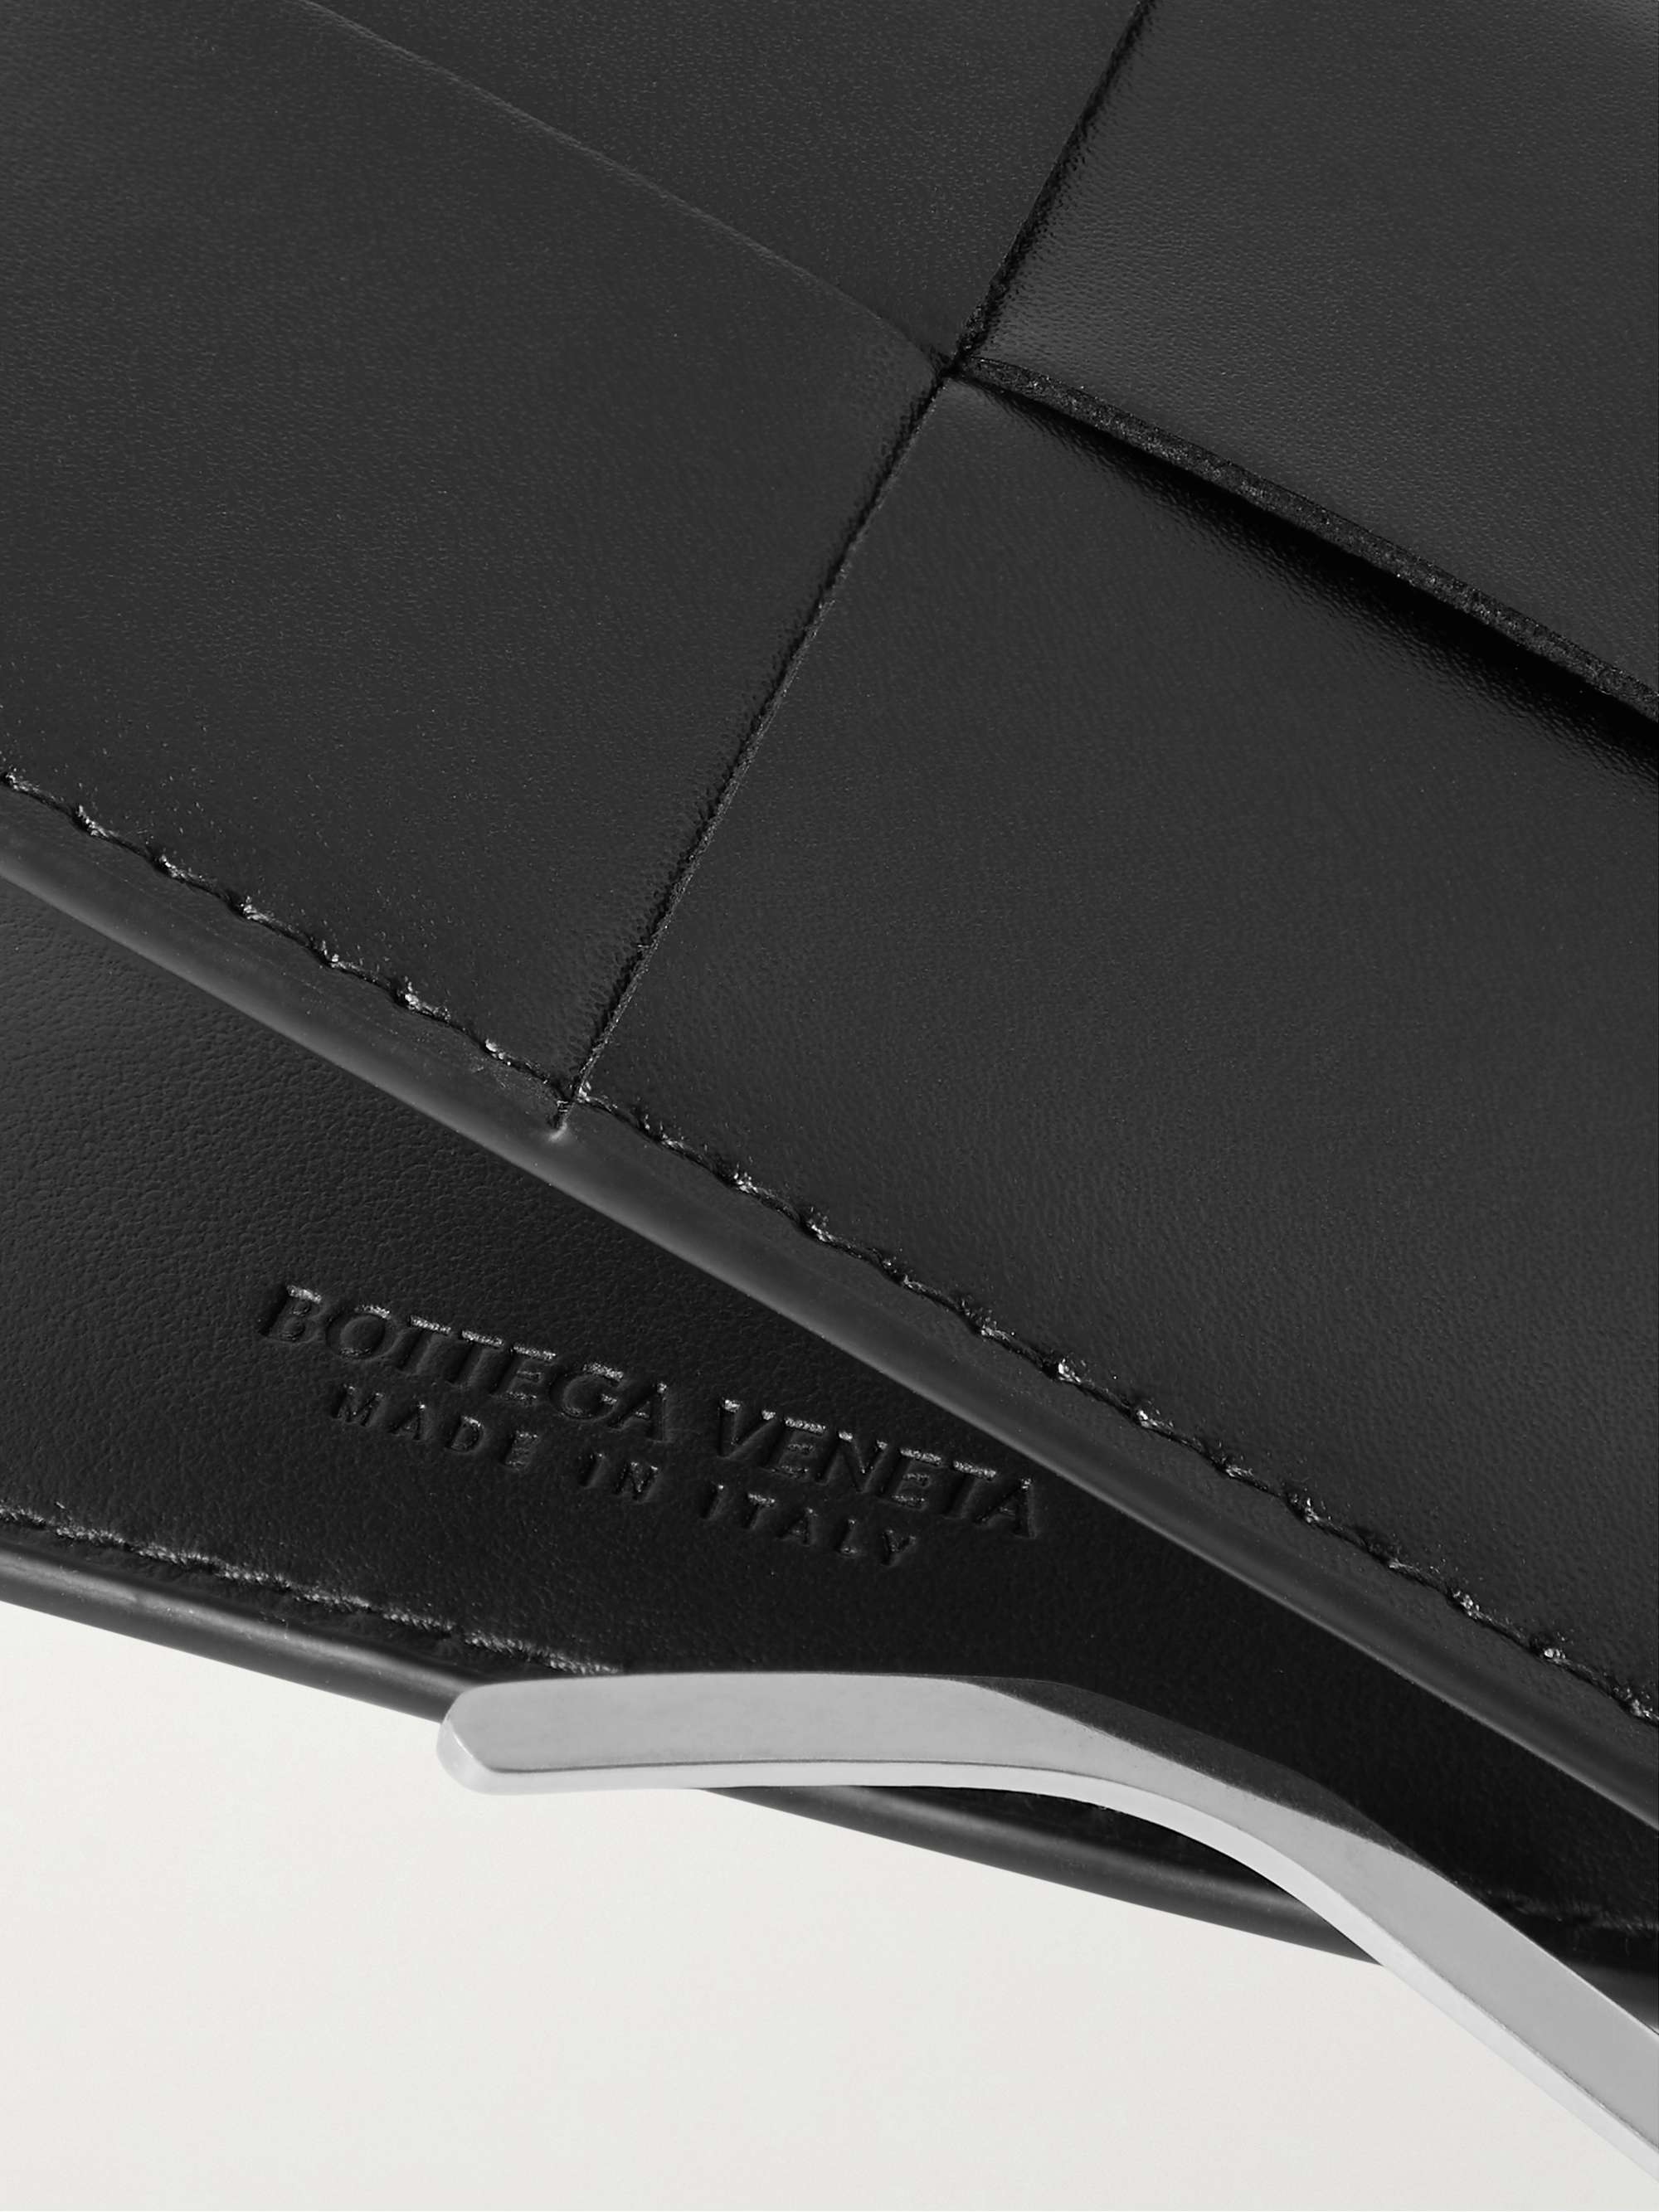 Bottega Veneta® Men's Intrecciato Bill Clip Wallet in Nero. Shop